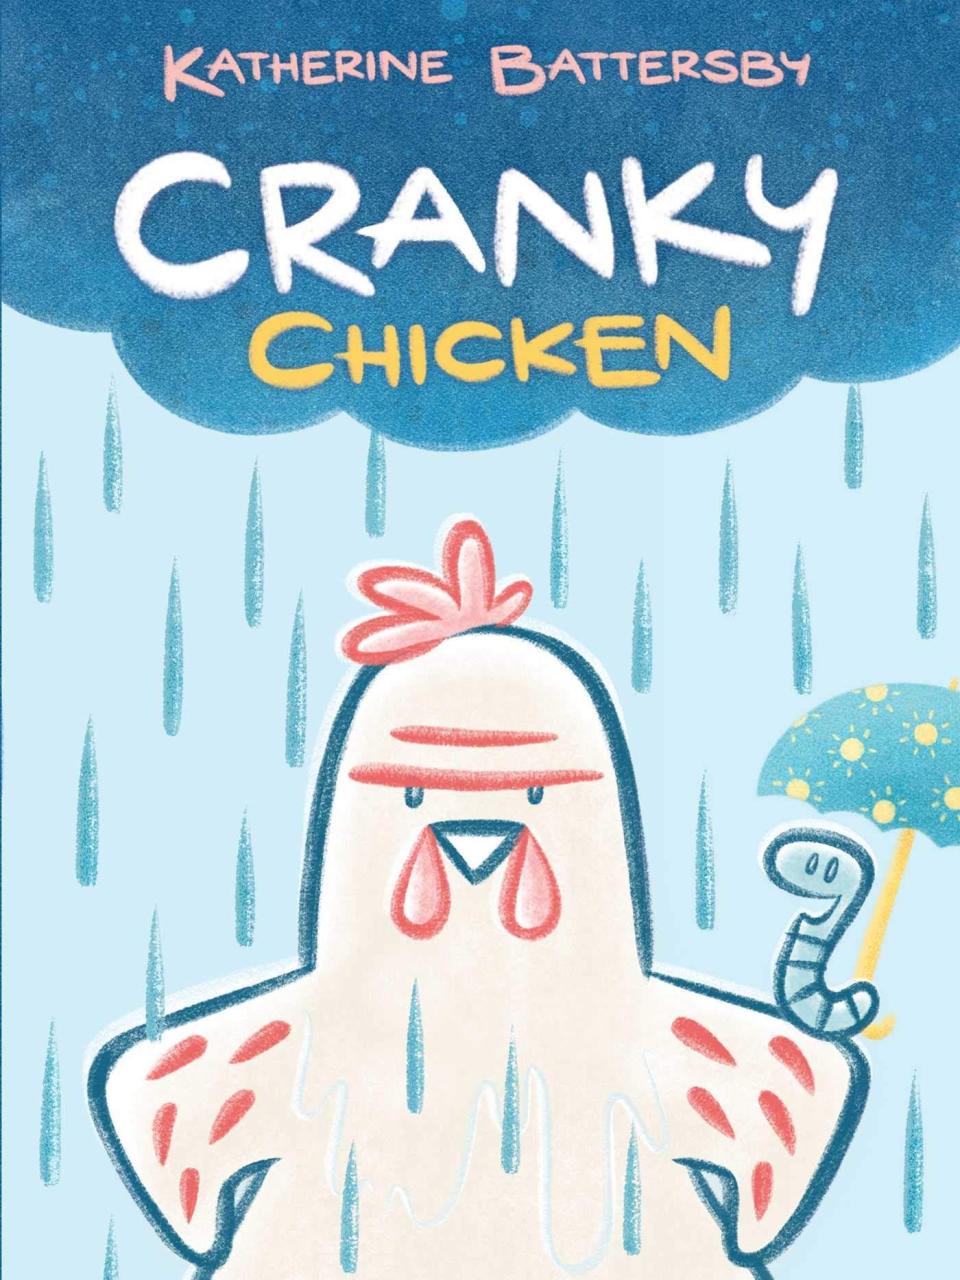 "Cranky Chicken"